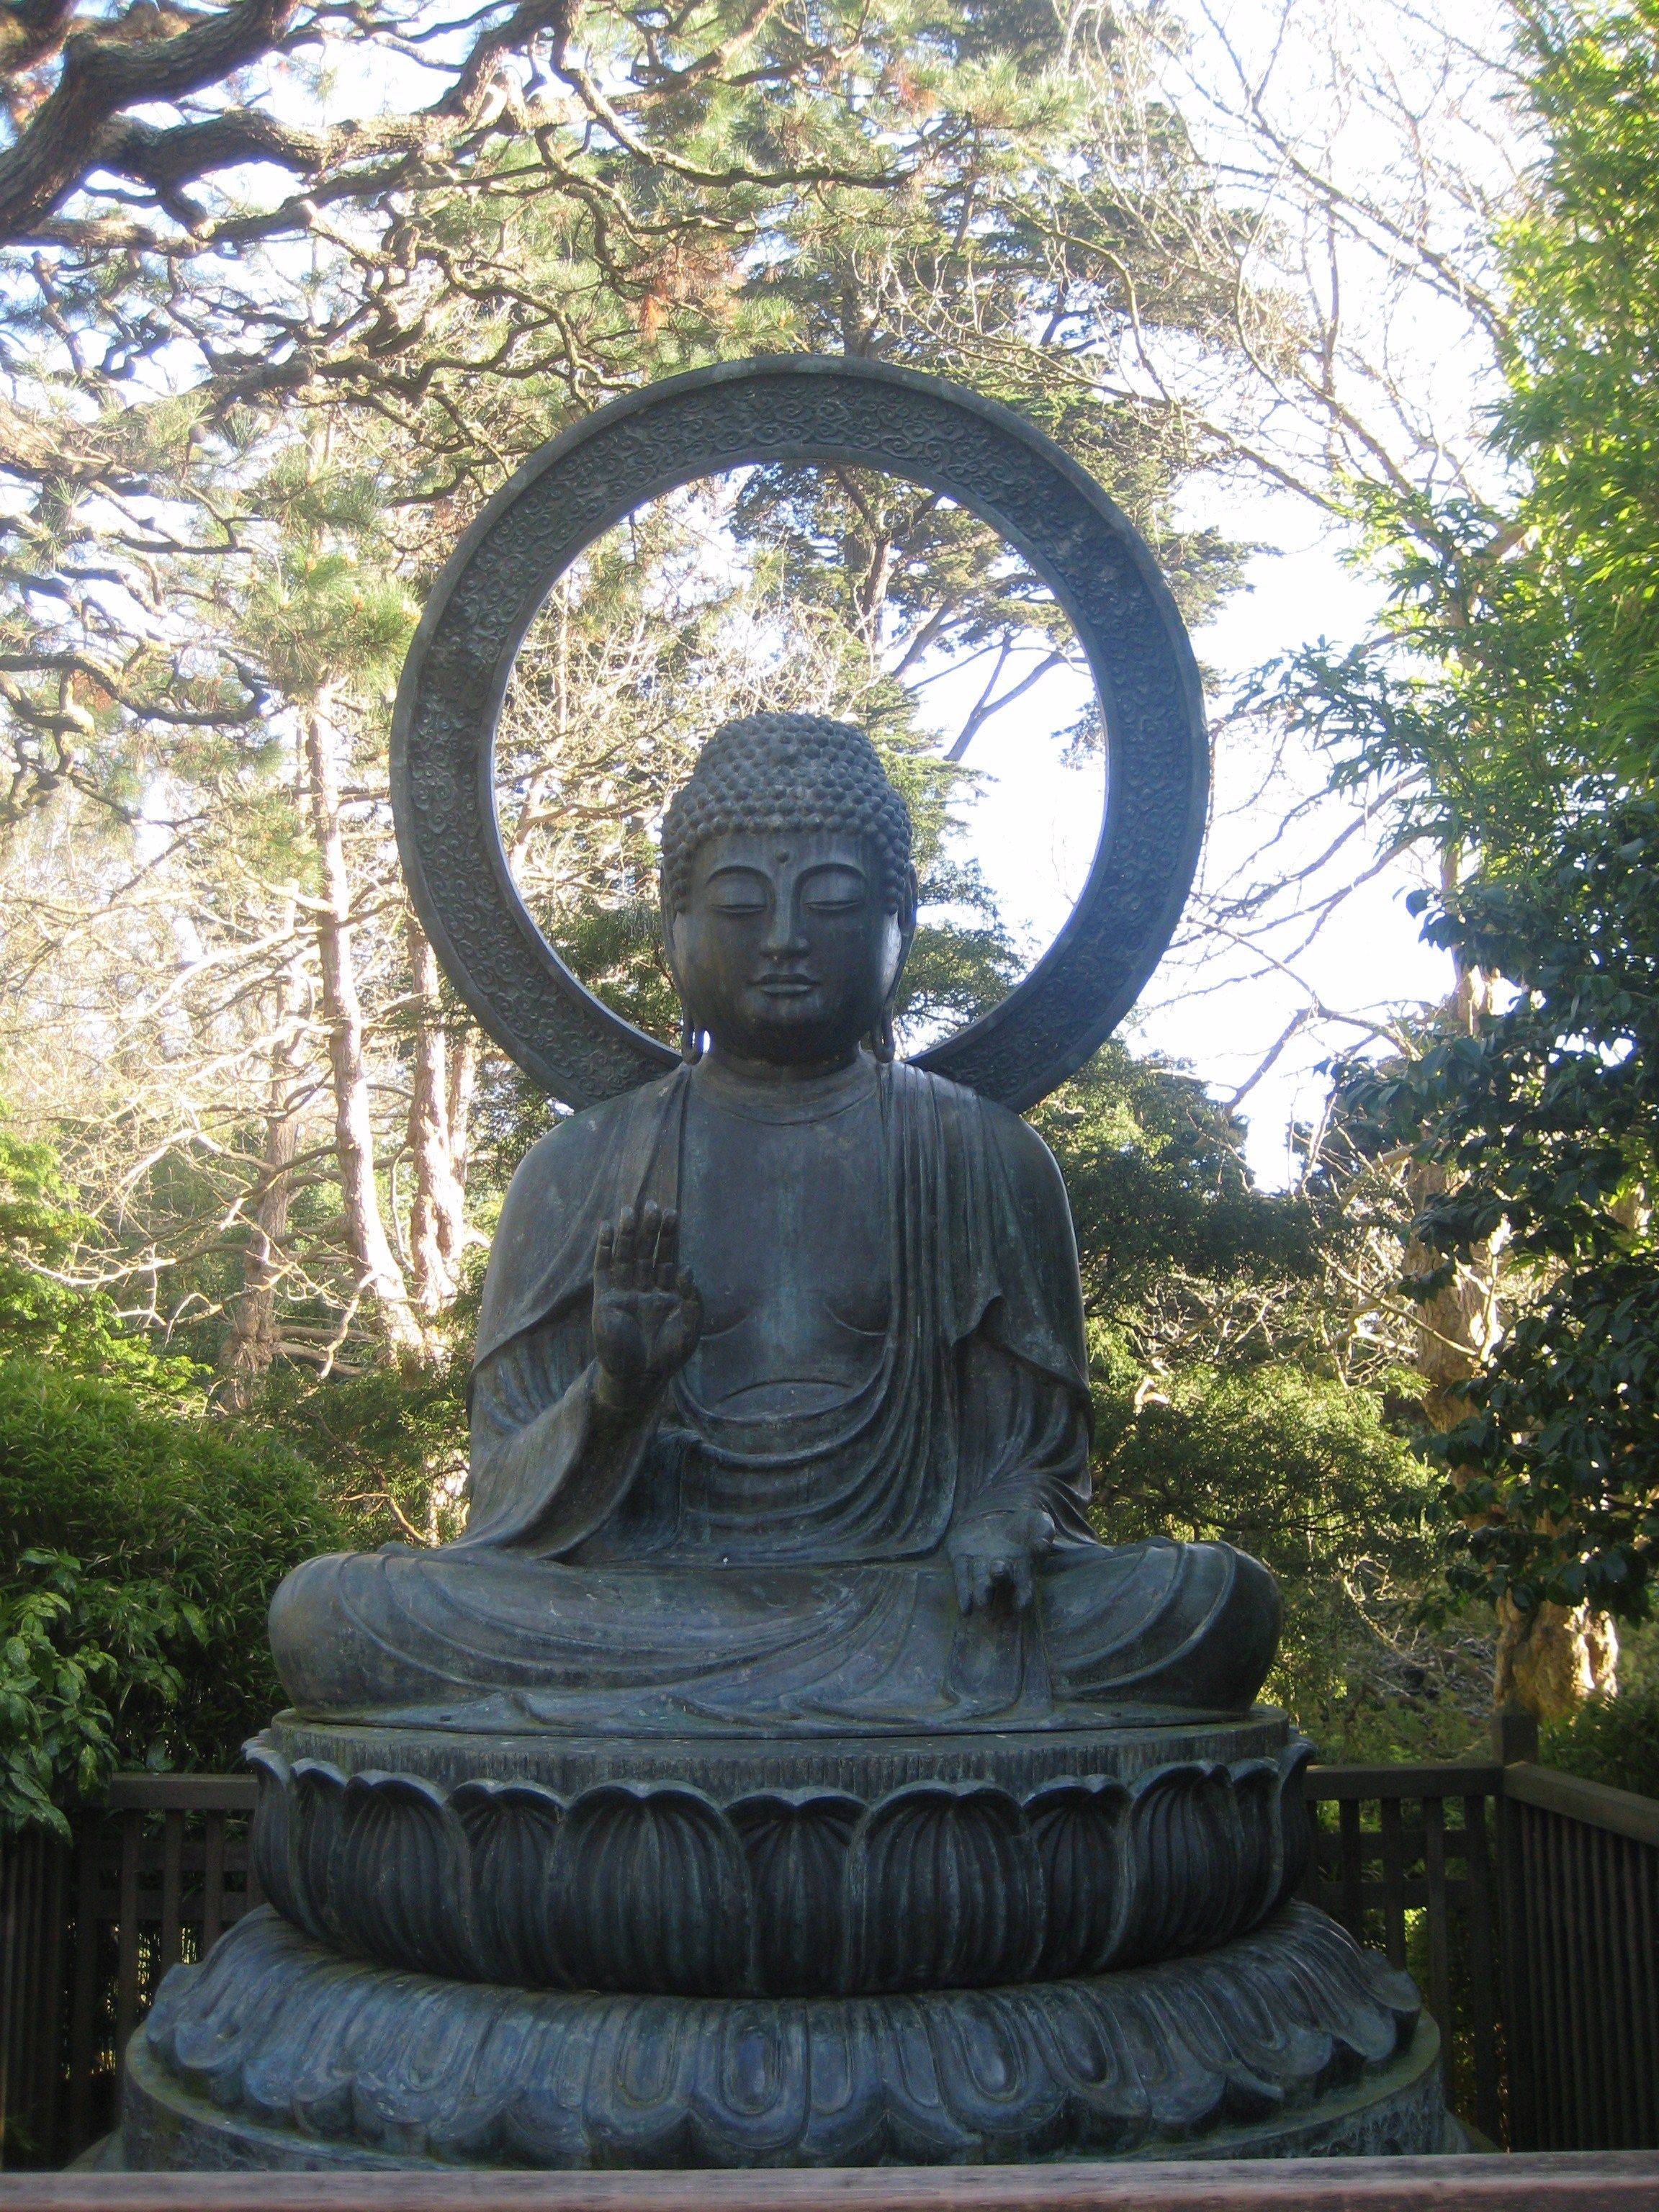 Buddha Statue Outdoor Meditation Inspiration Garden Decor